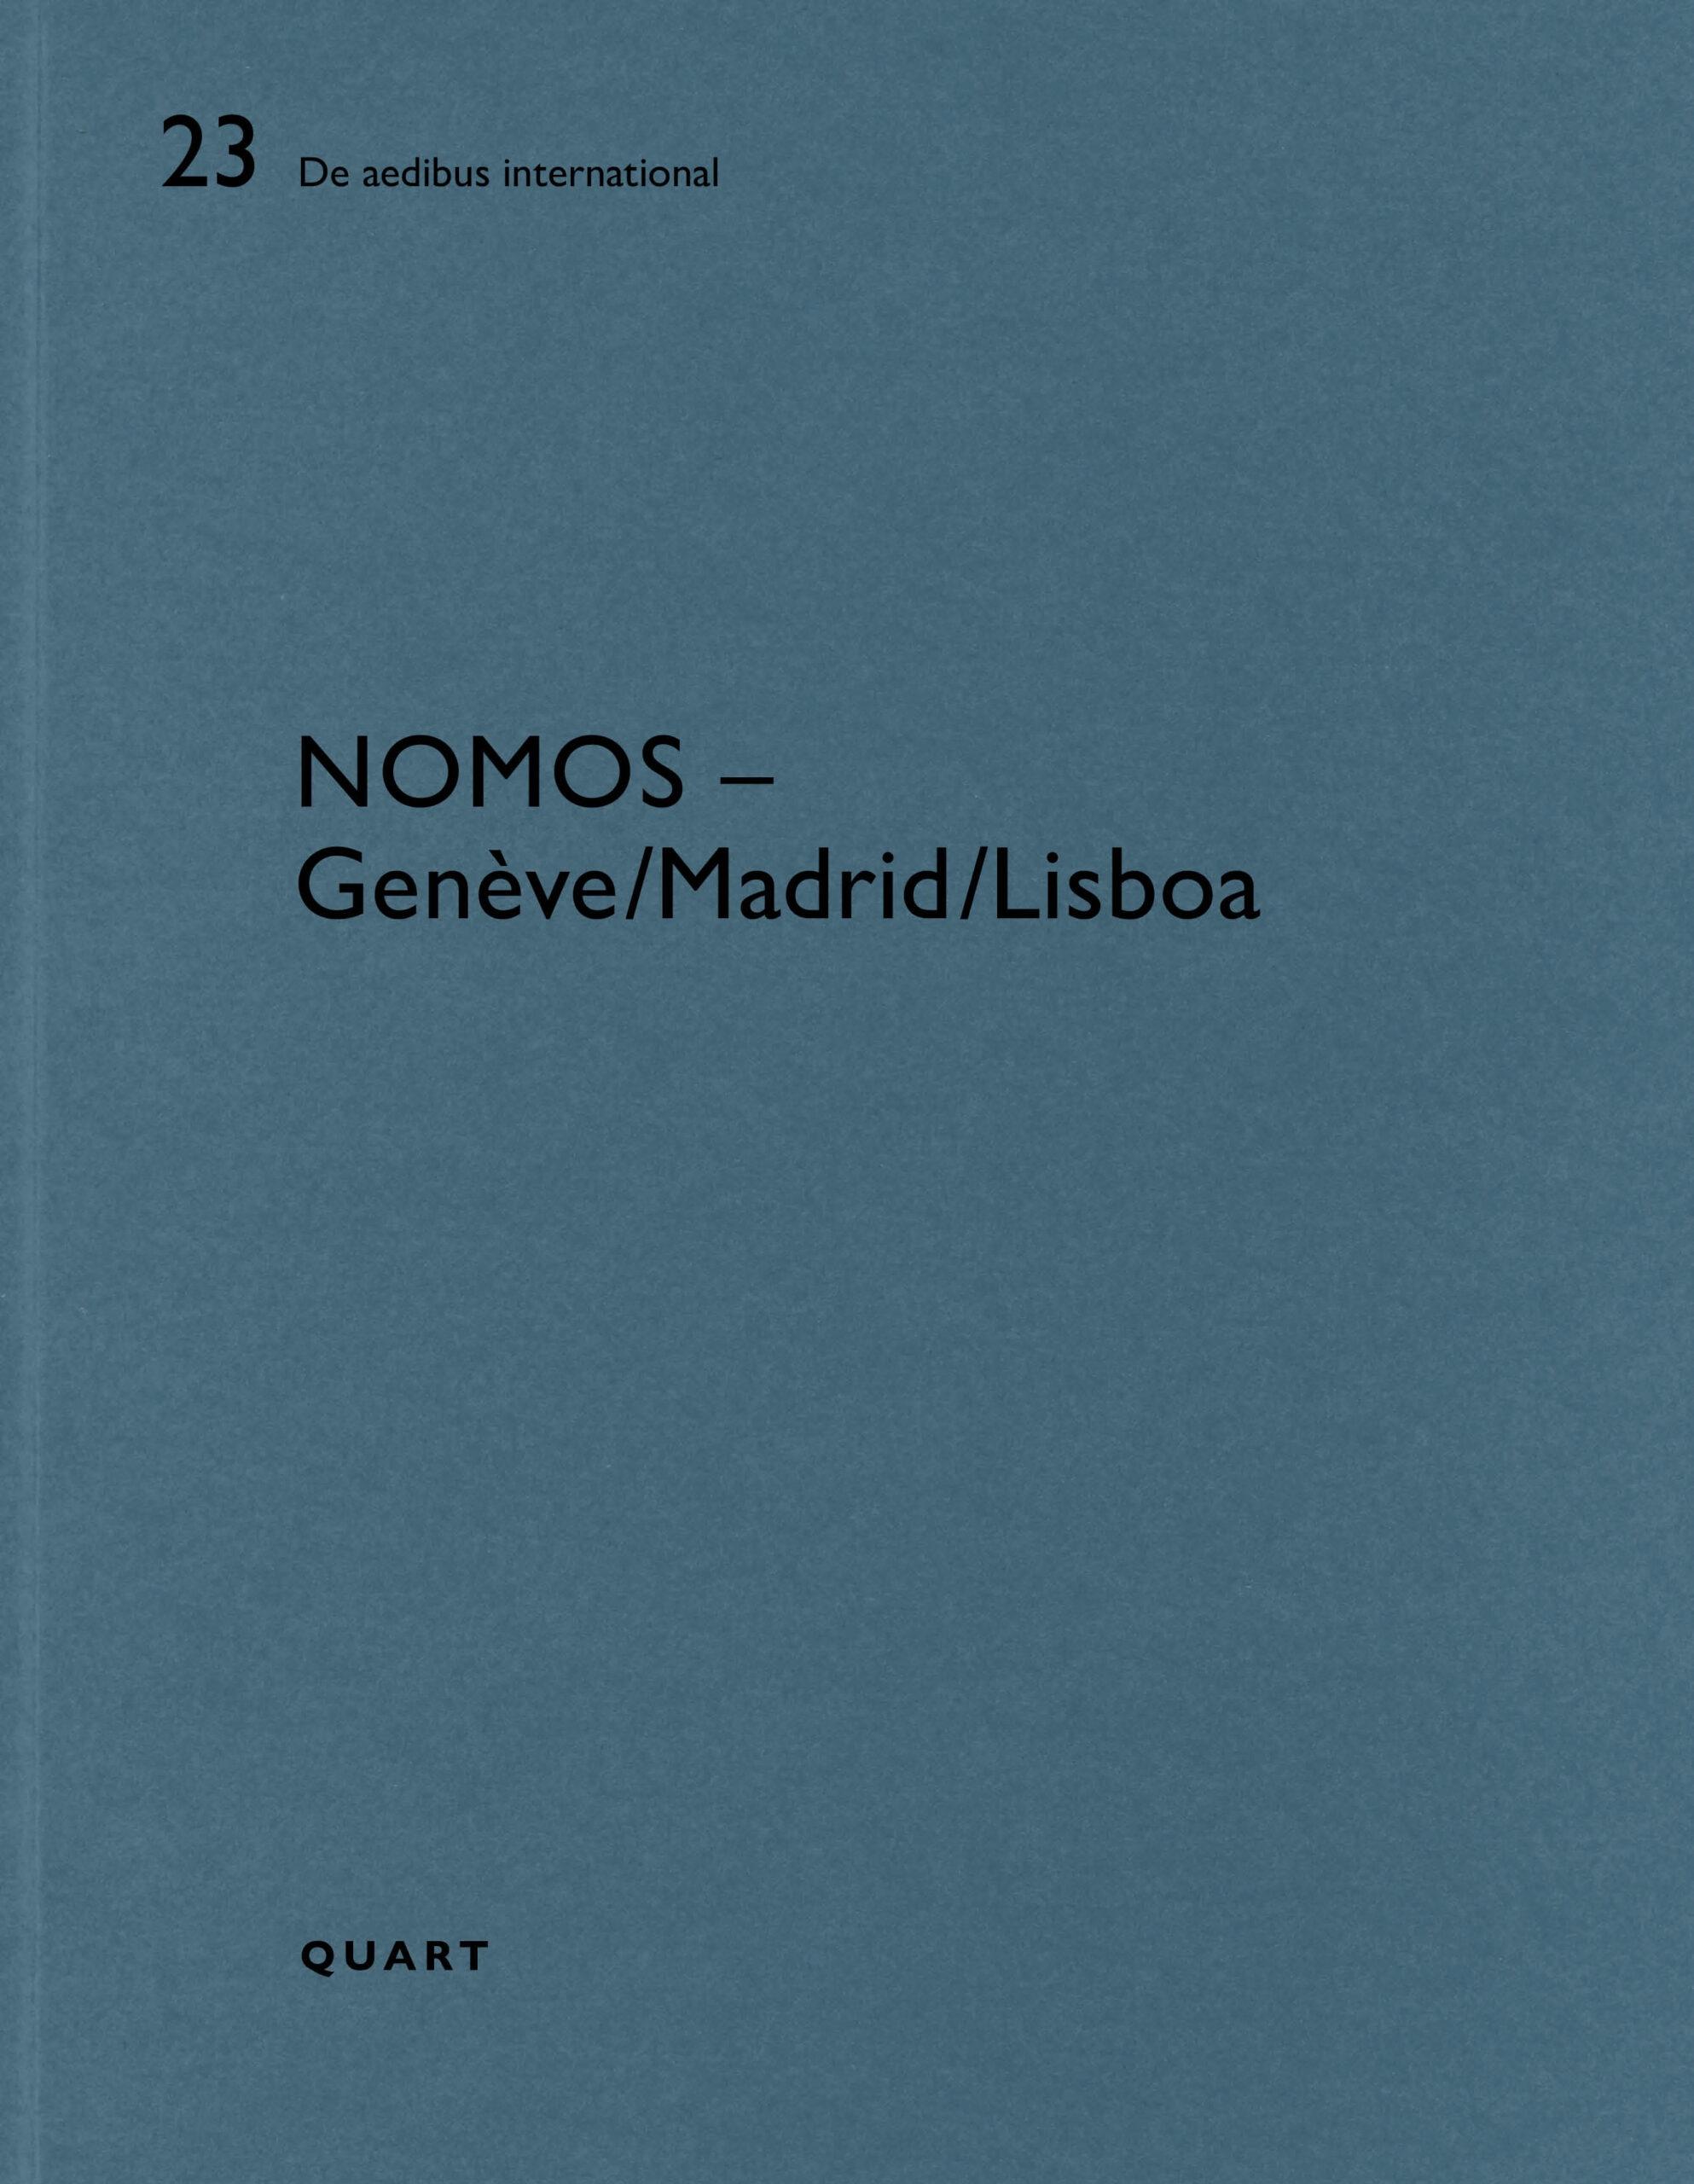 NOMOS: GENEVE/LISBOA/MADRID. DE AEDIBUS INTERNATIONAL Nº 23